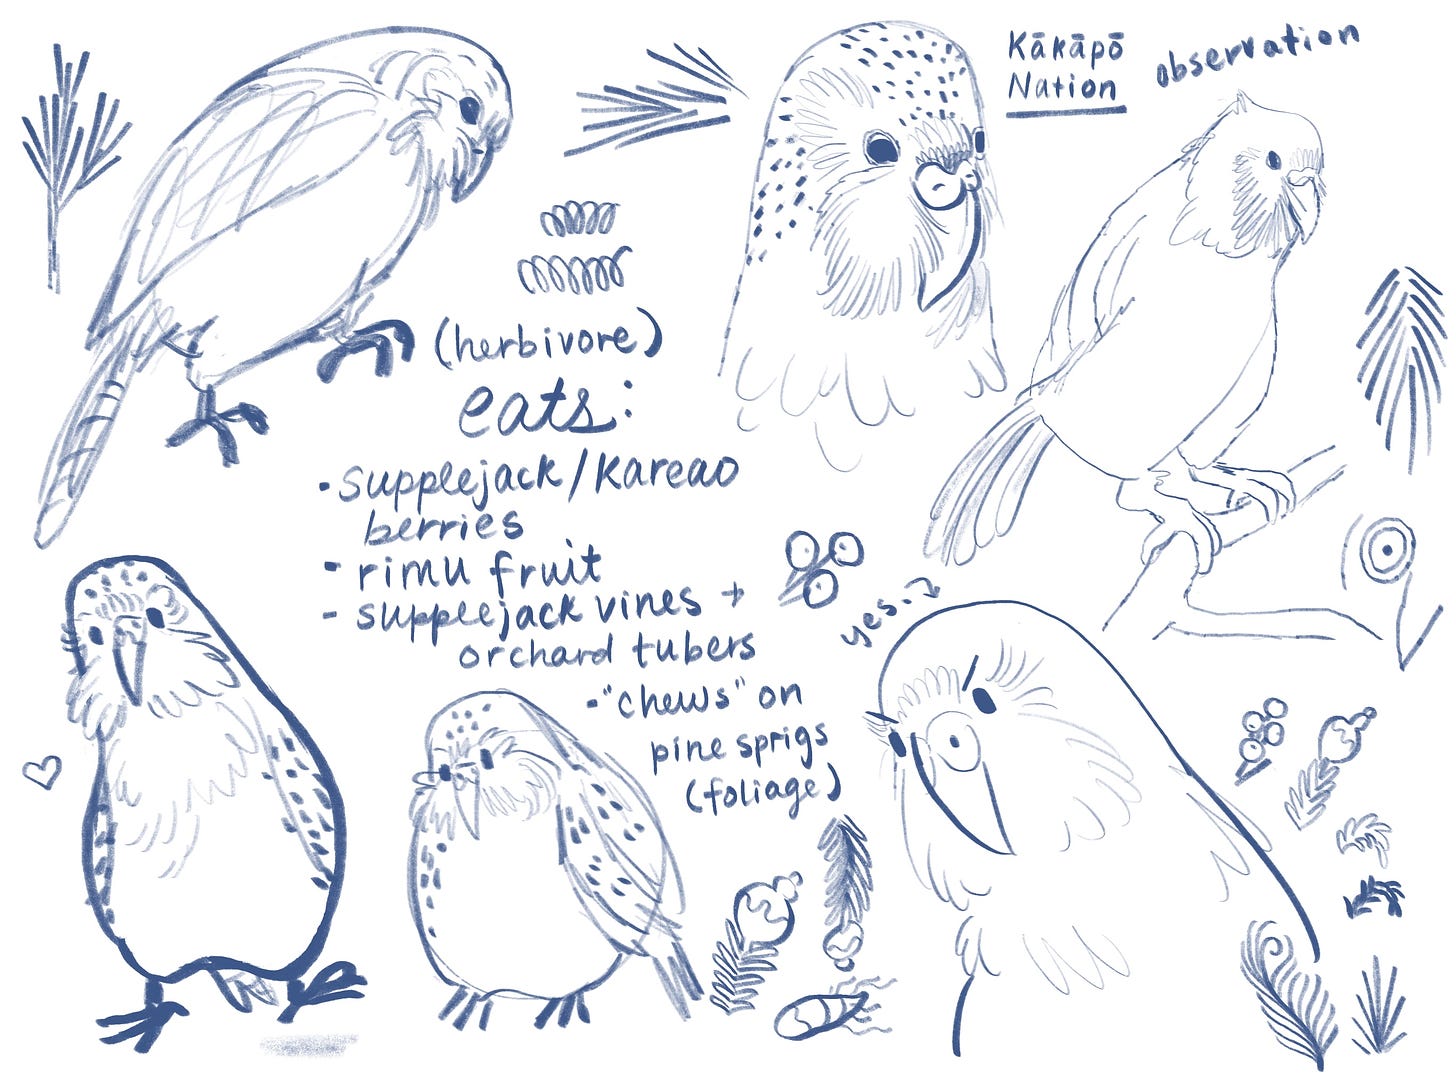 kakapo sketches and notes by Kayla Stark